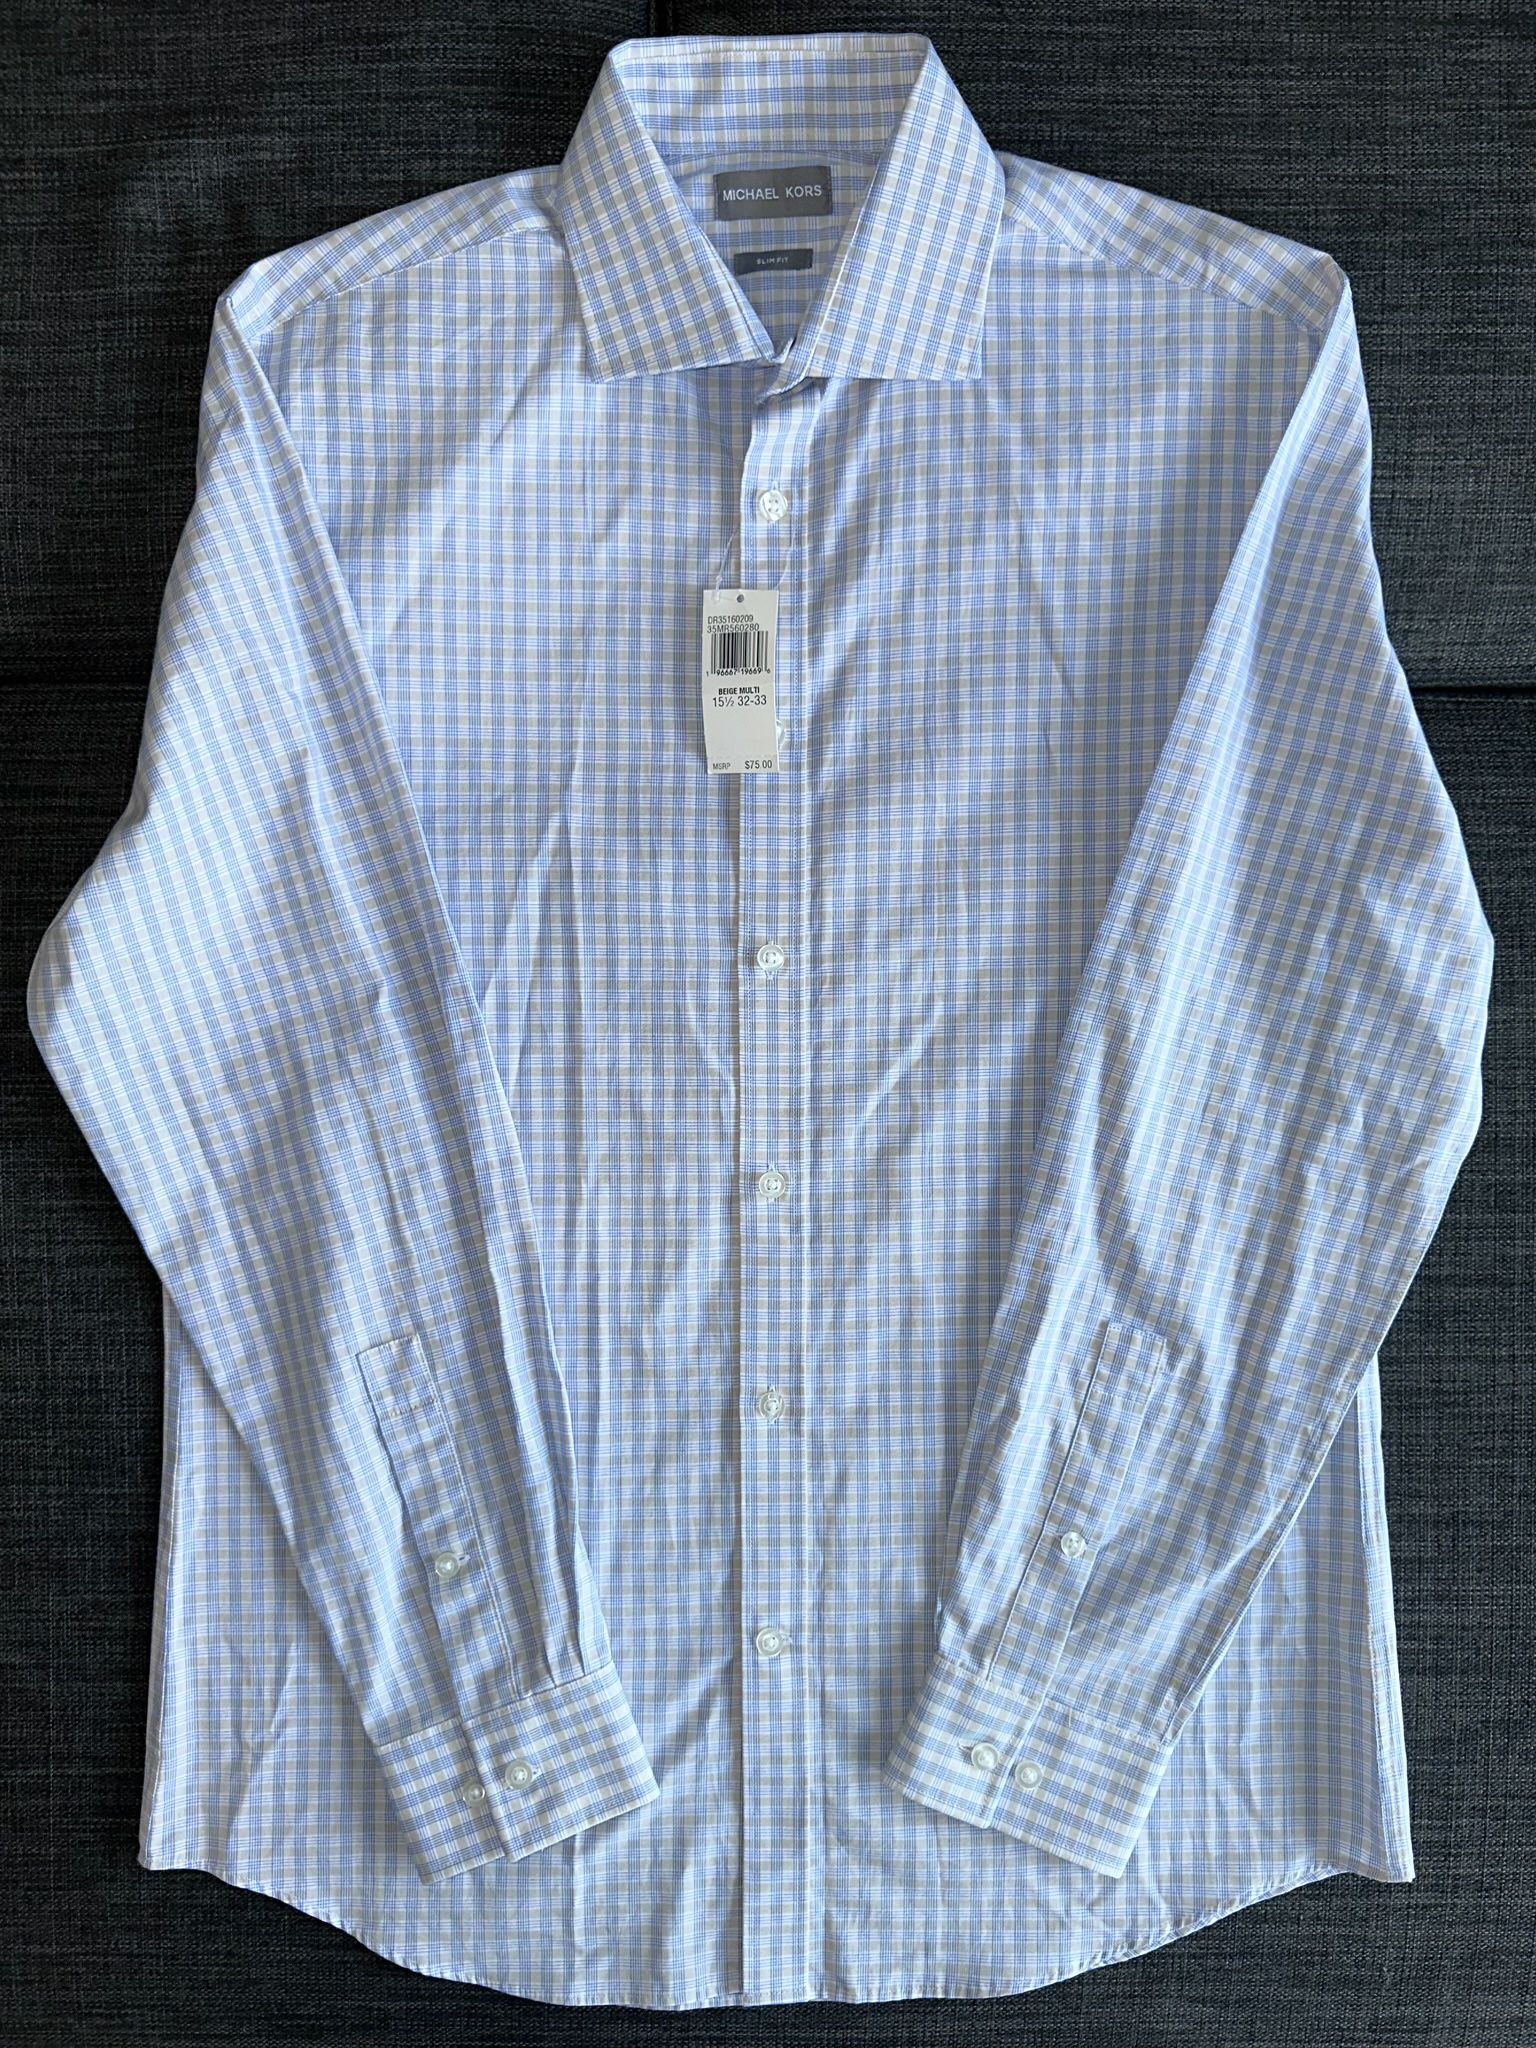 Michael Kors MK Men's Button Shirt White Blue Slim Fit Medium M 